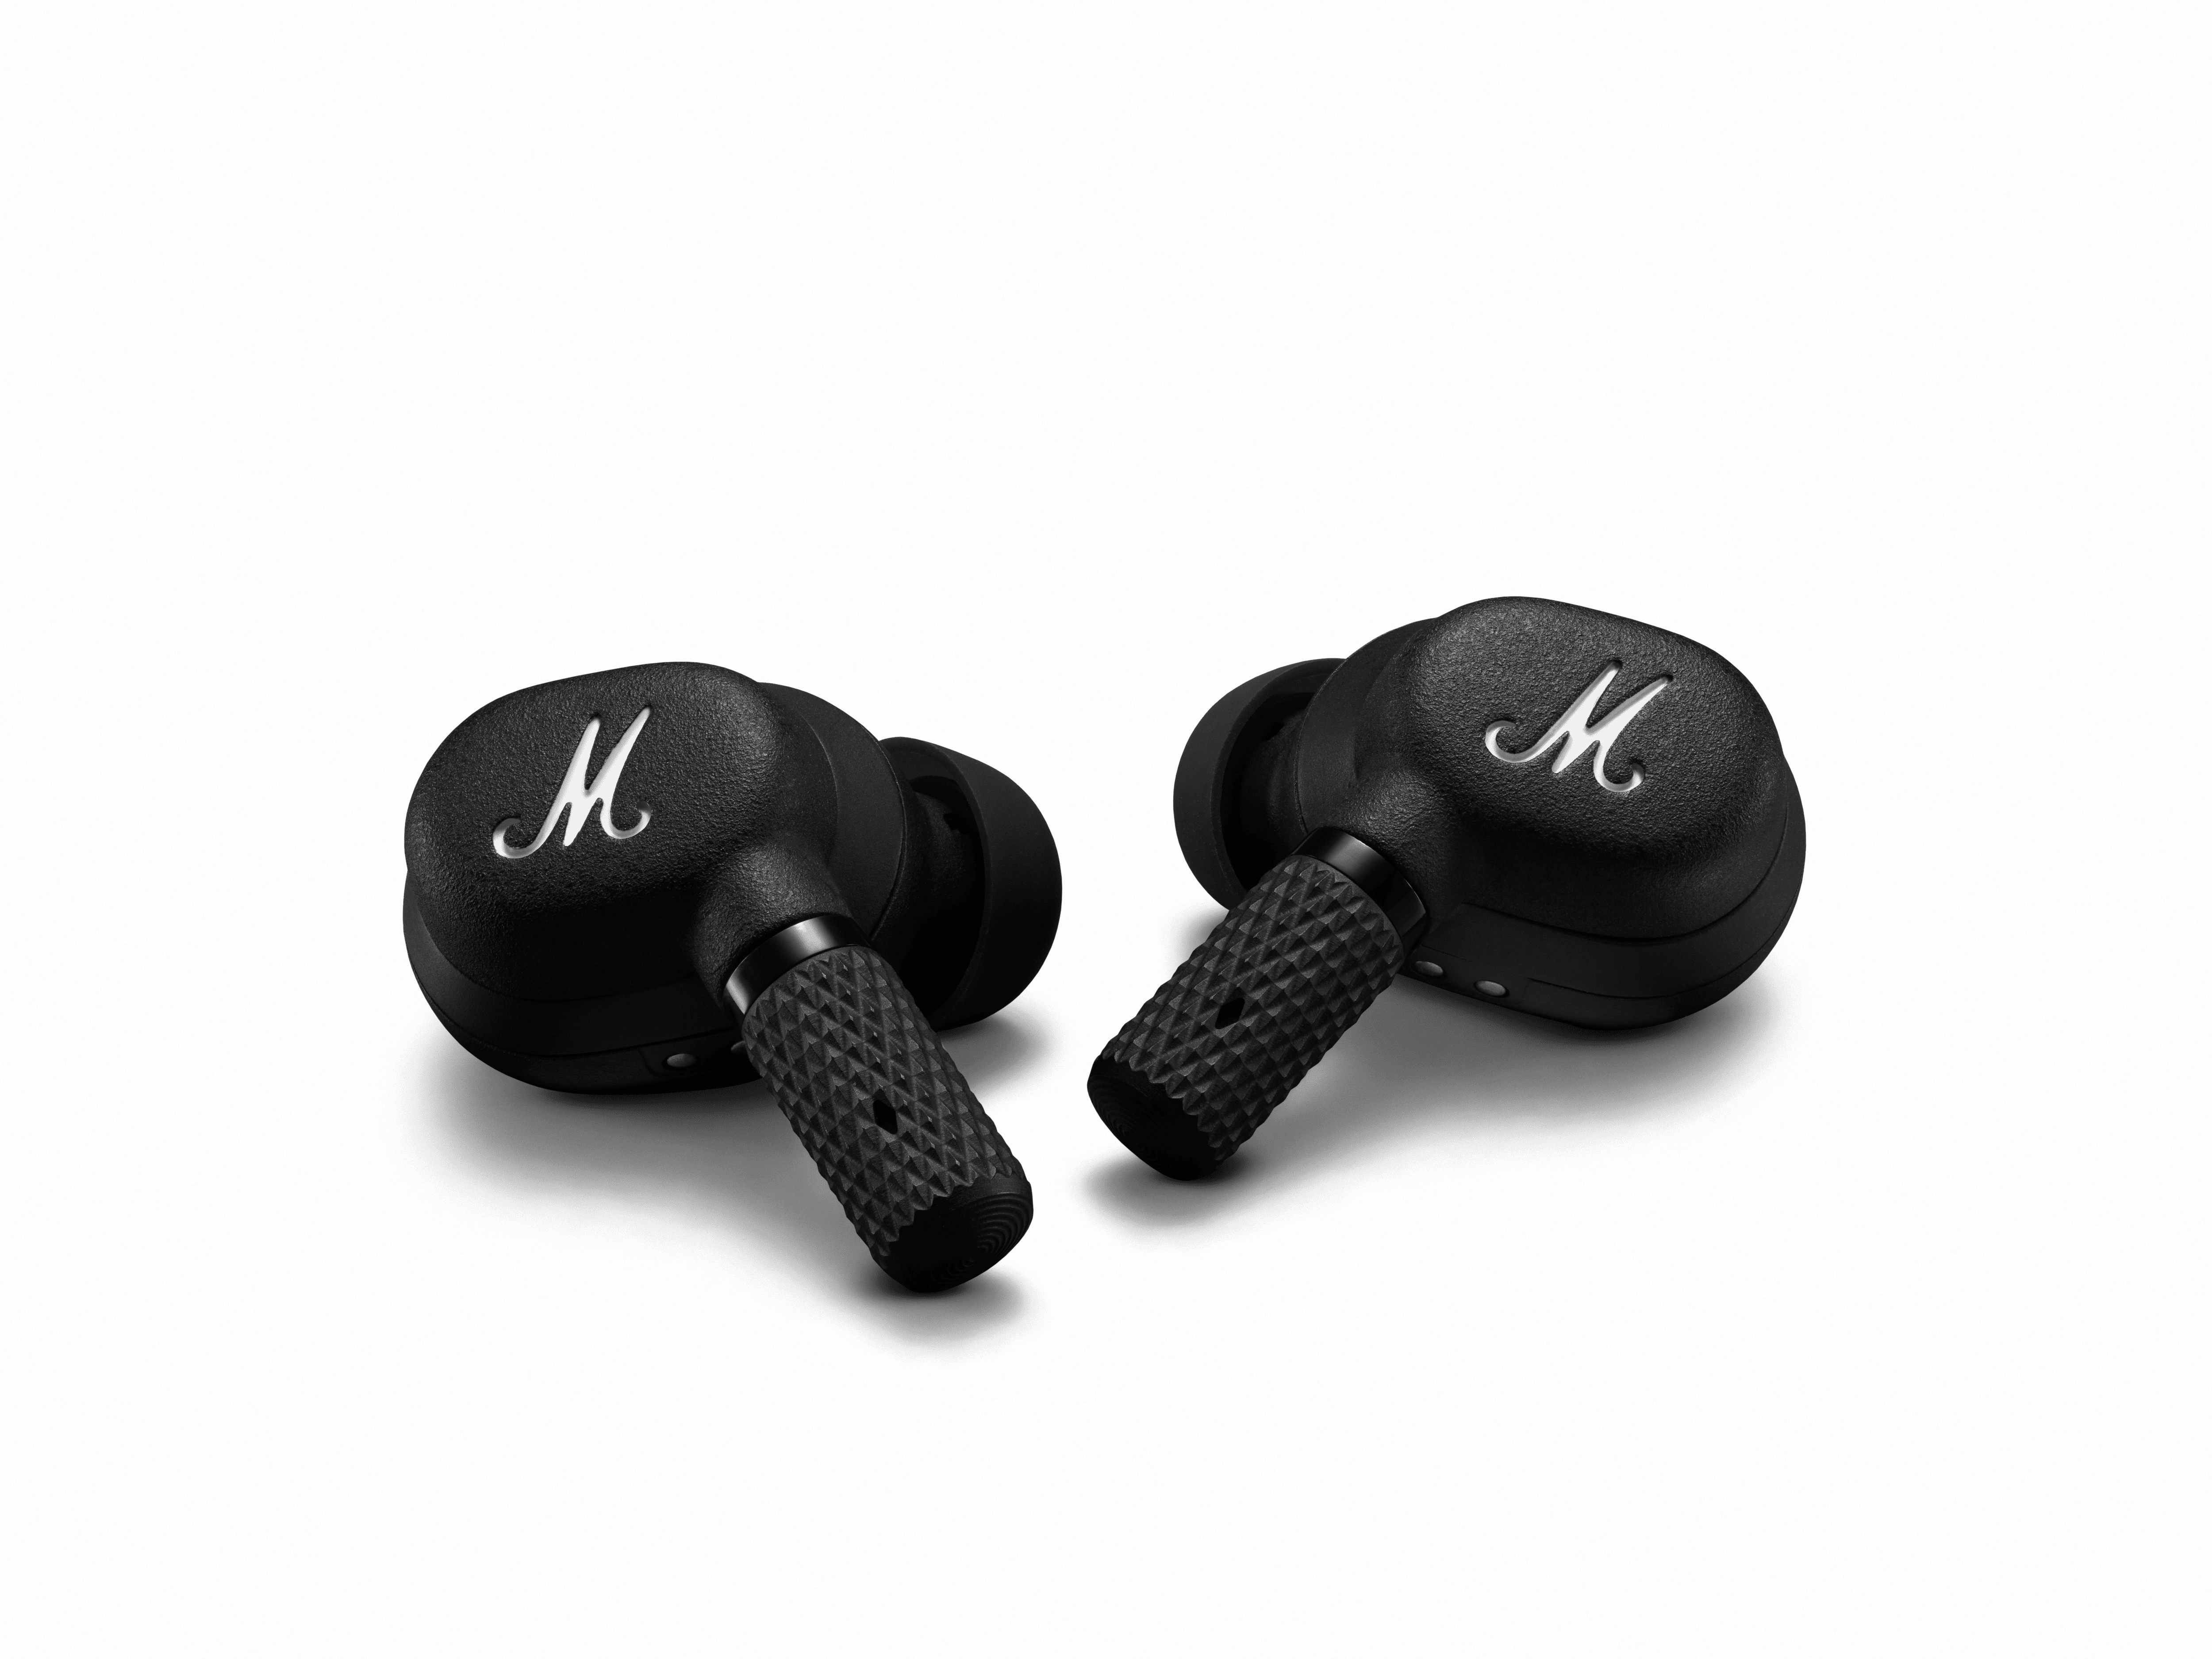 MARSHALL Motif ANC, Schwarz In-ear Bluetooth Kopfhörer